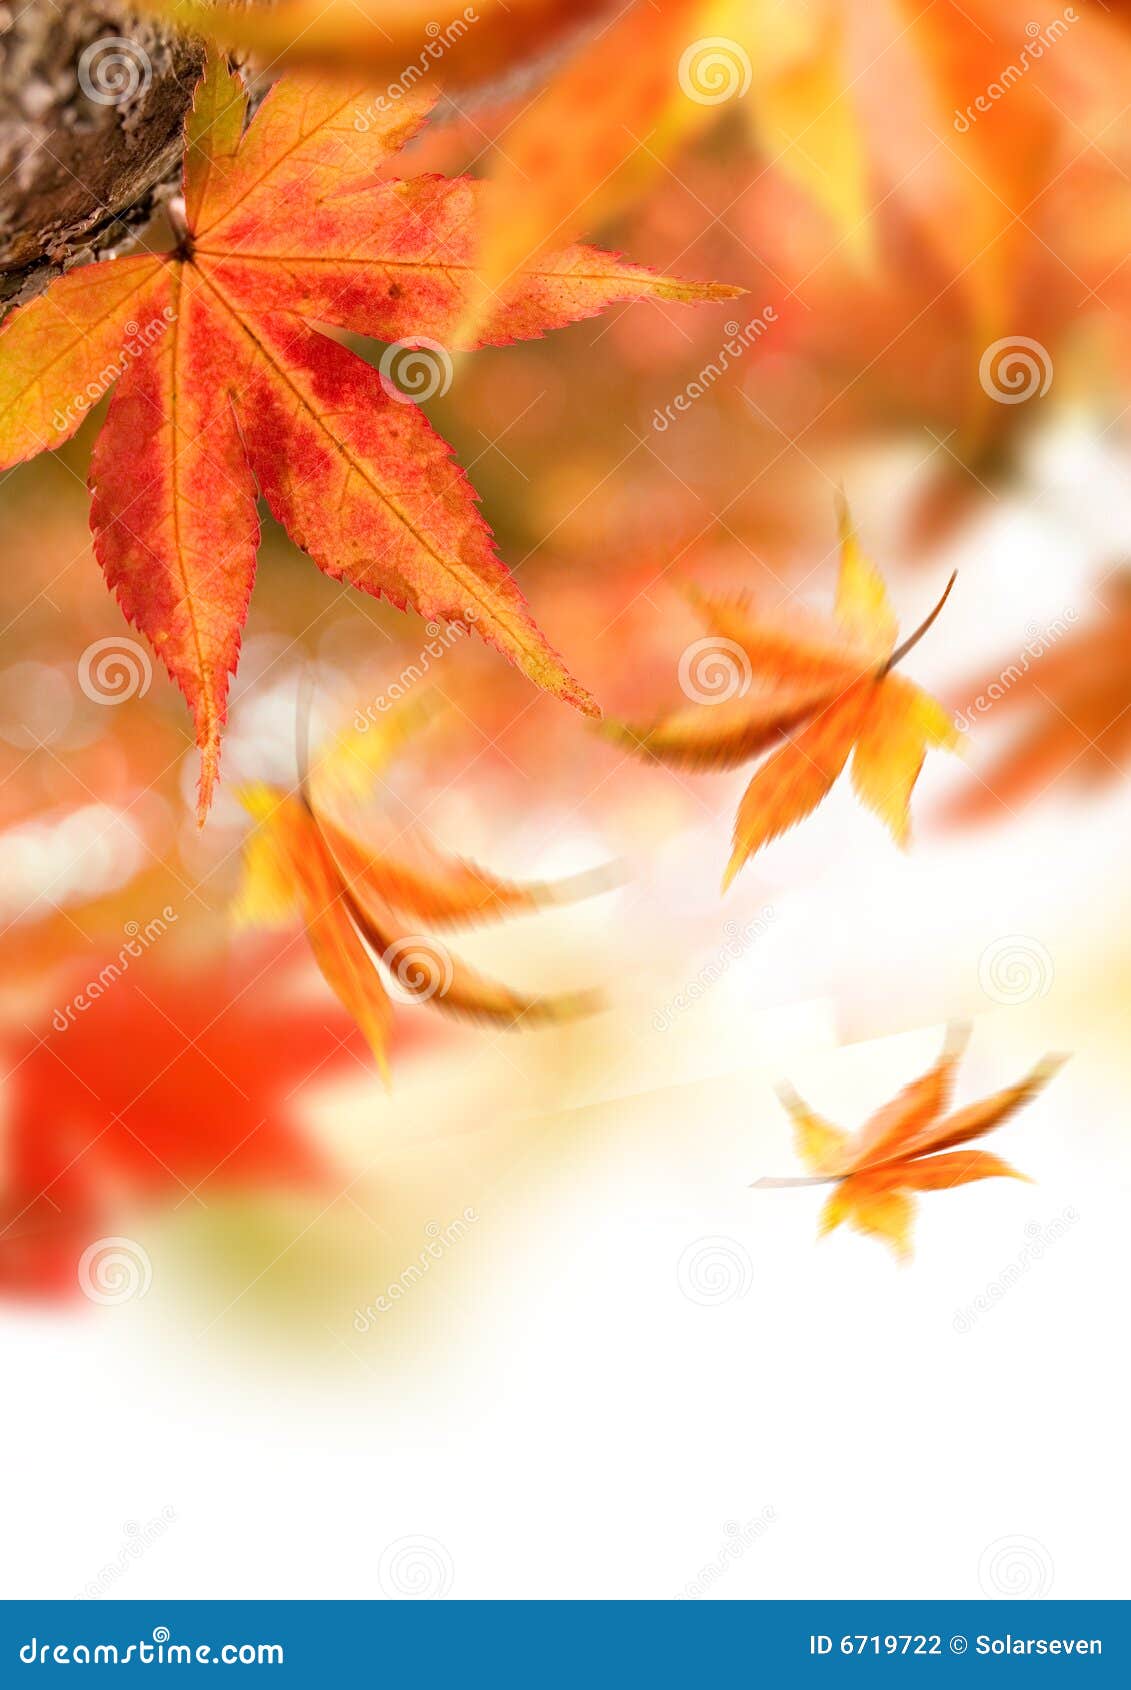 Autumn Falling Leaves stock photo. Image of autumn, outdoors - 6719722